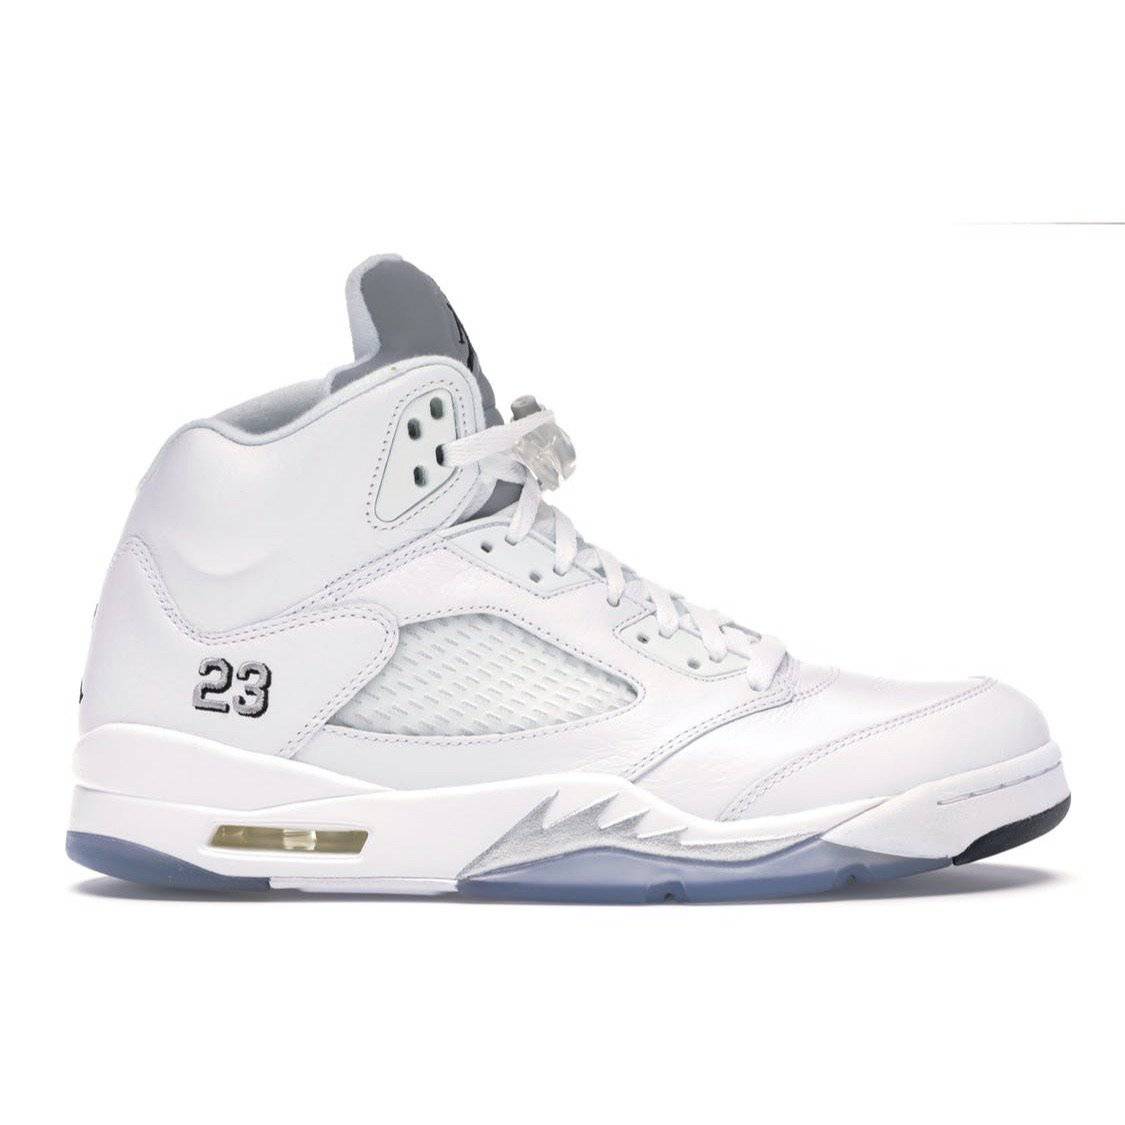 Air Jordan 5 Retro “White Metallic”